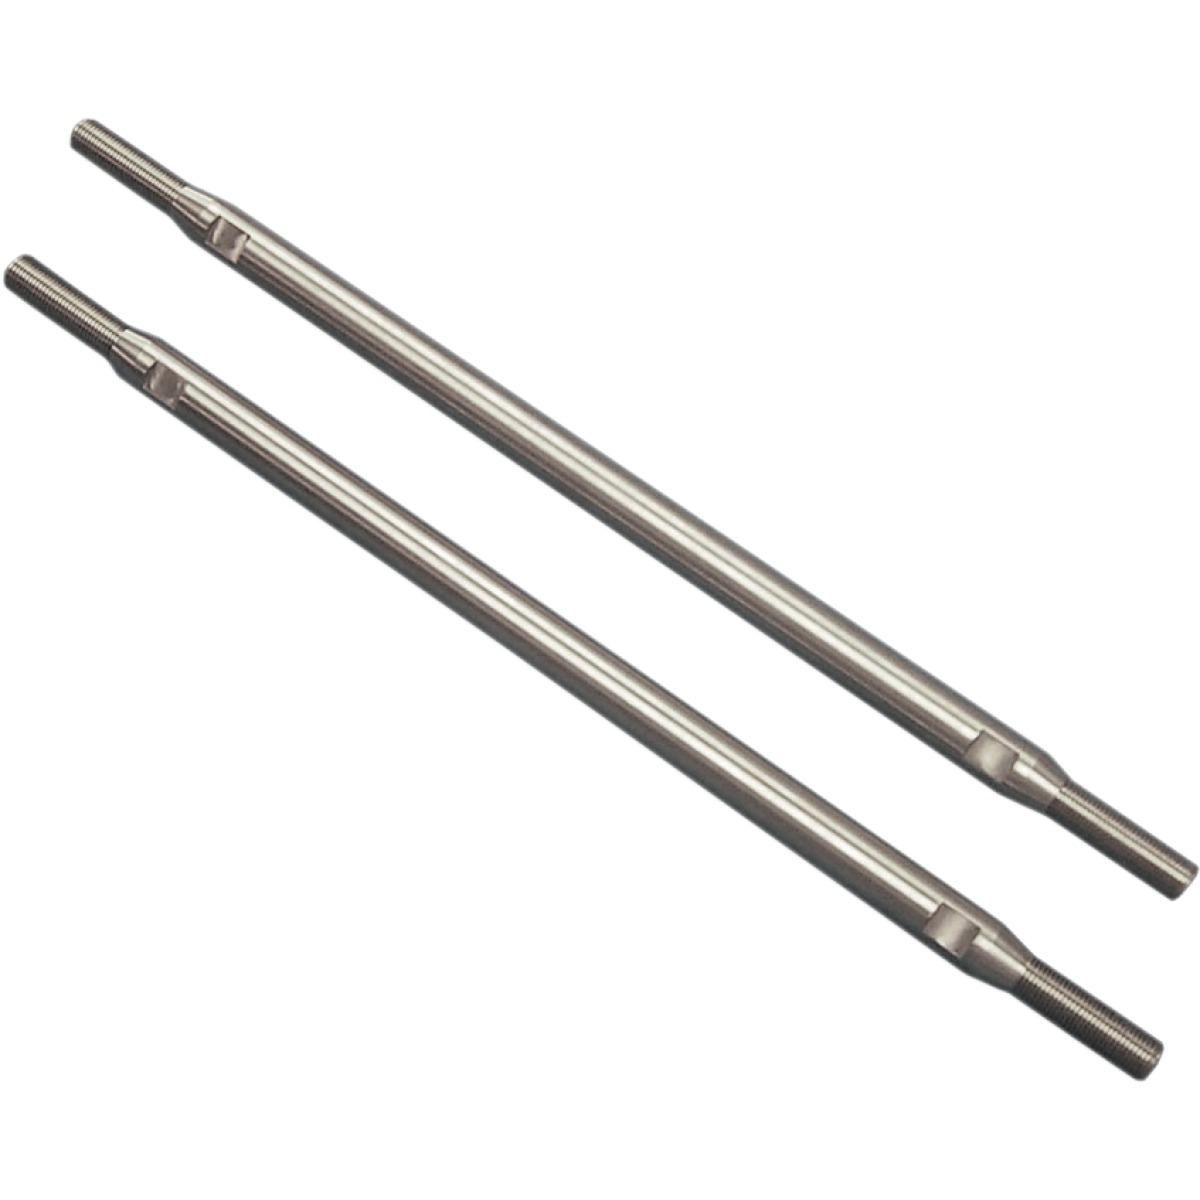 3GDS-LONE-STAR-22-22002 Stainless Steel Tie-Rods - Standard